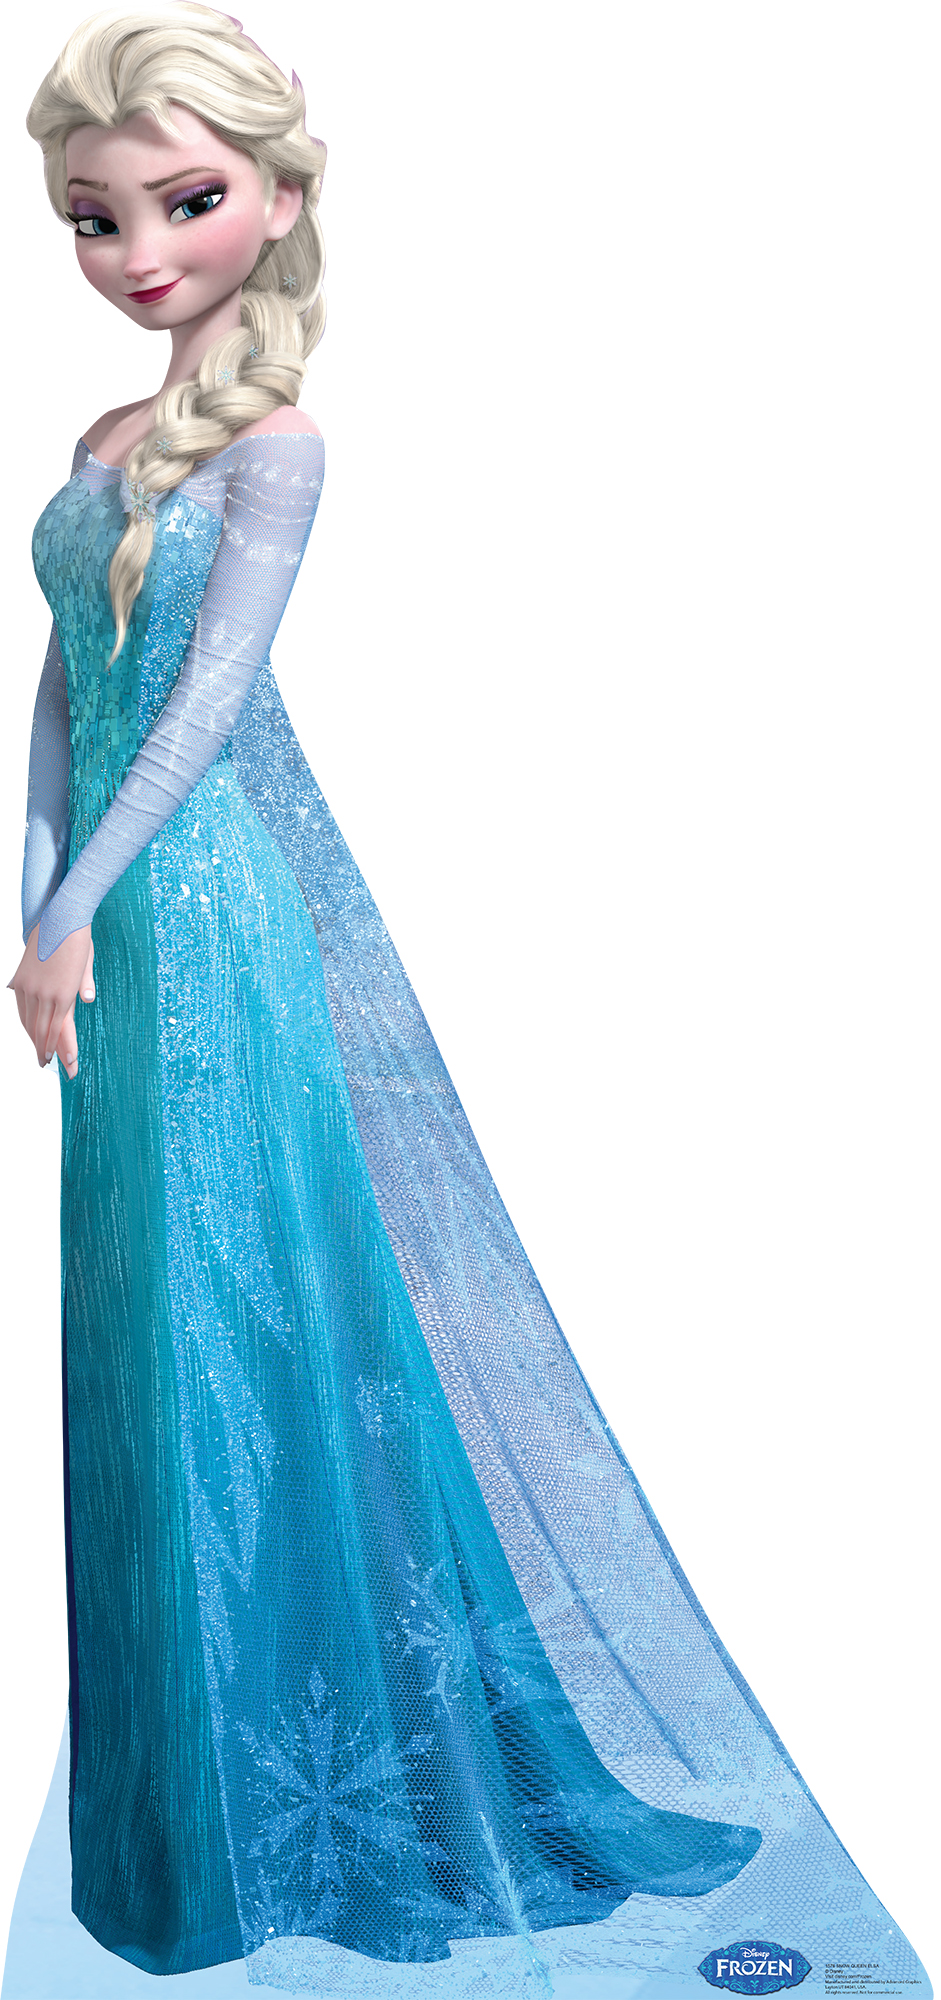 Details About Snow Queen Elsa Disney Frozen Lifesize Cardboard Cutout